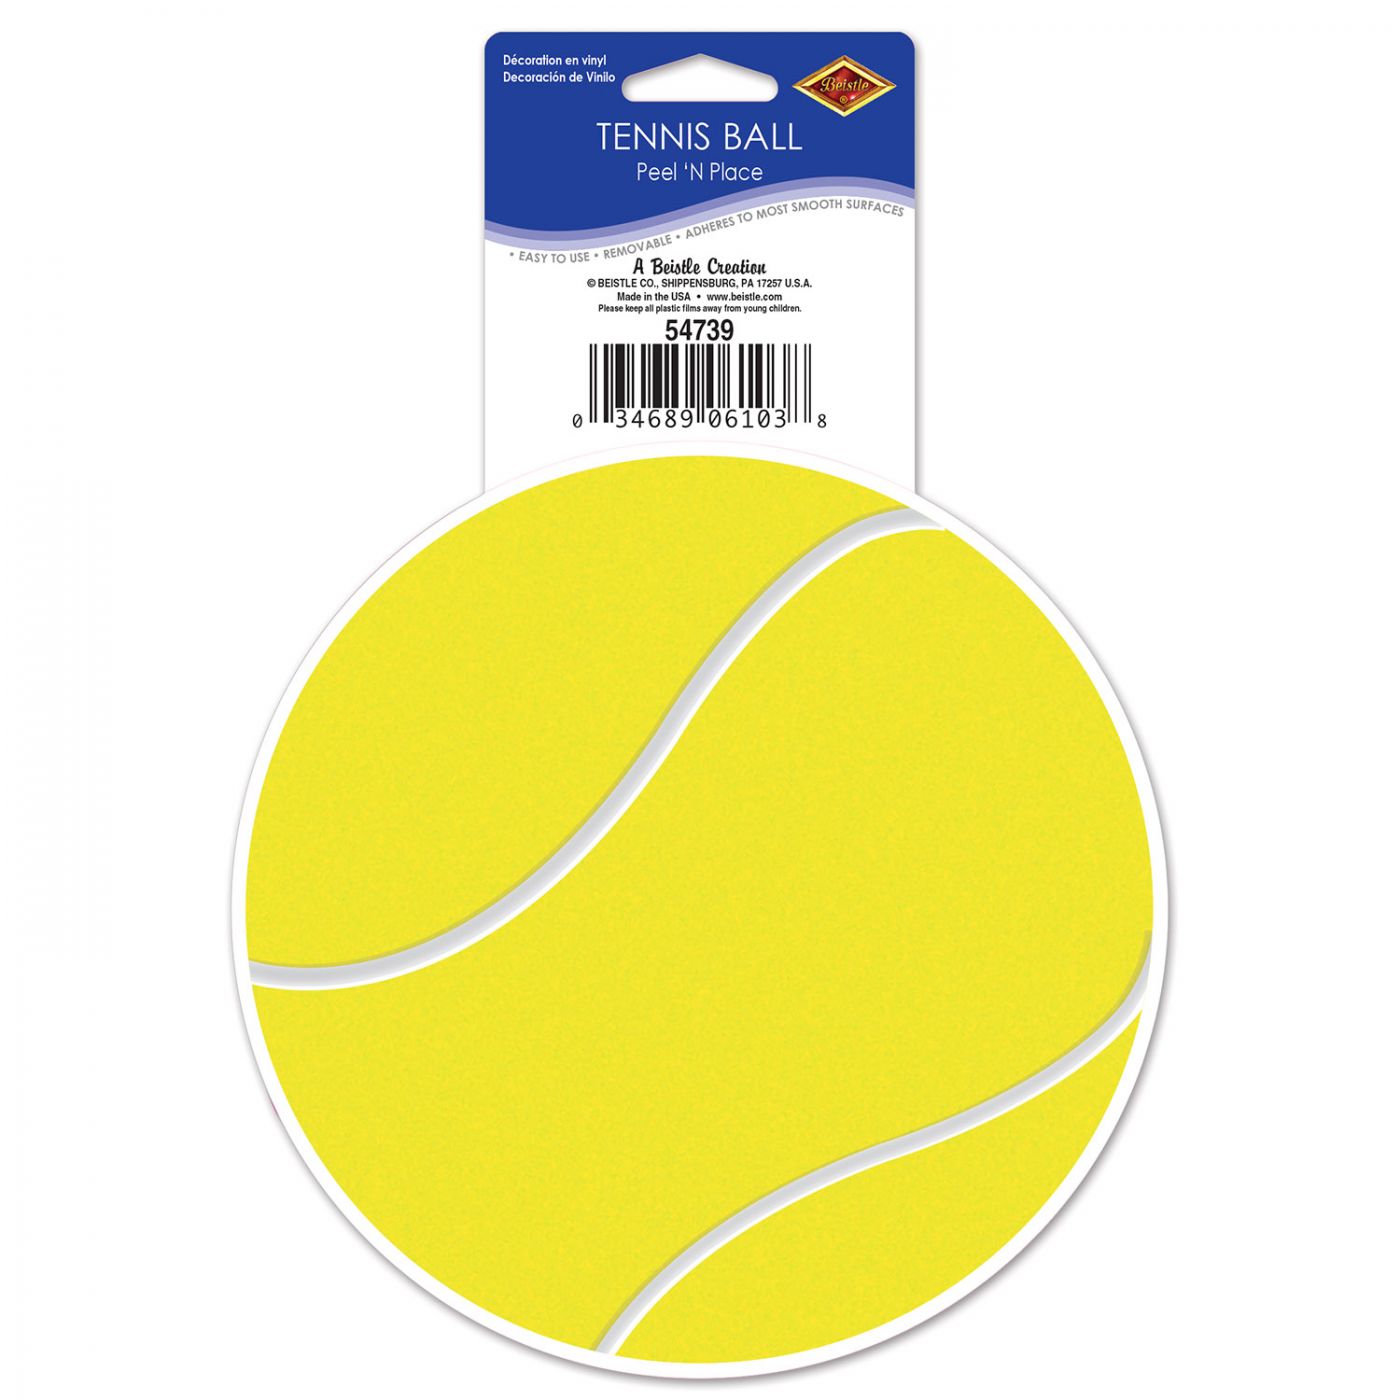 Tennis Ball Peel 'N Place image